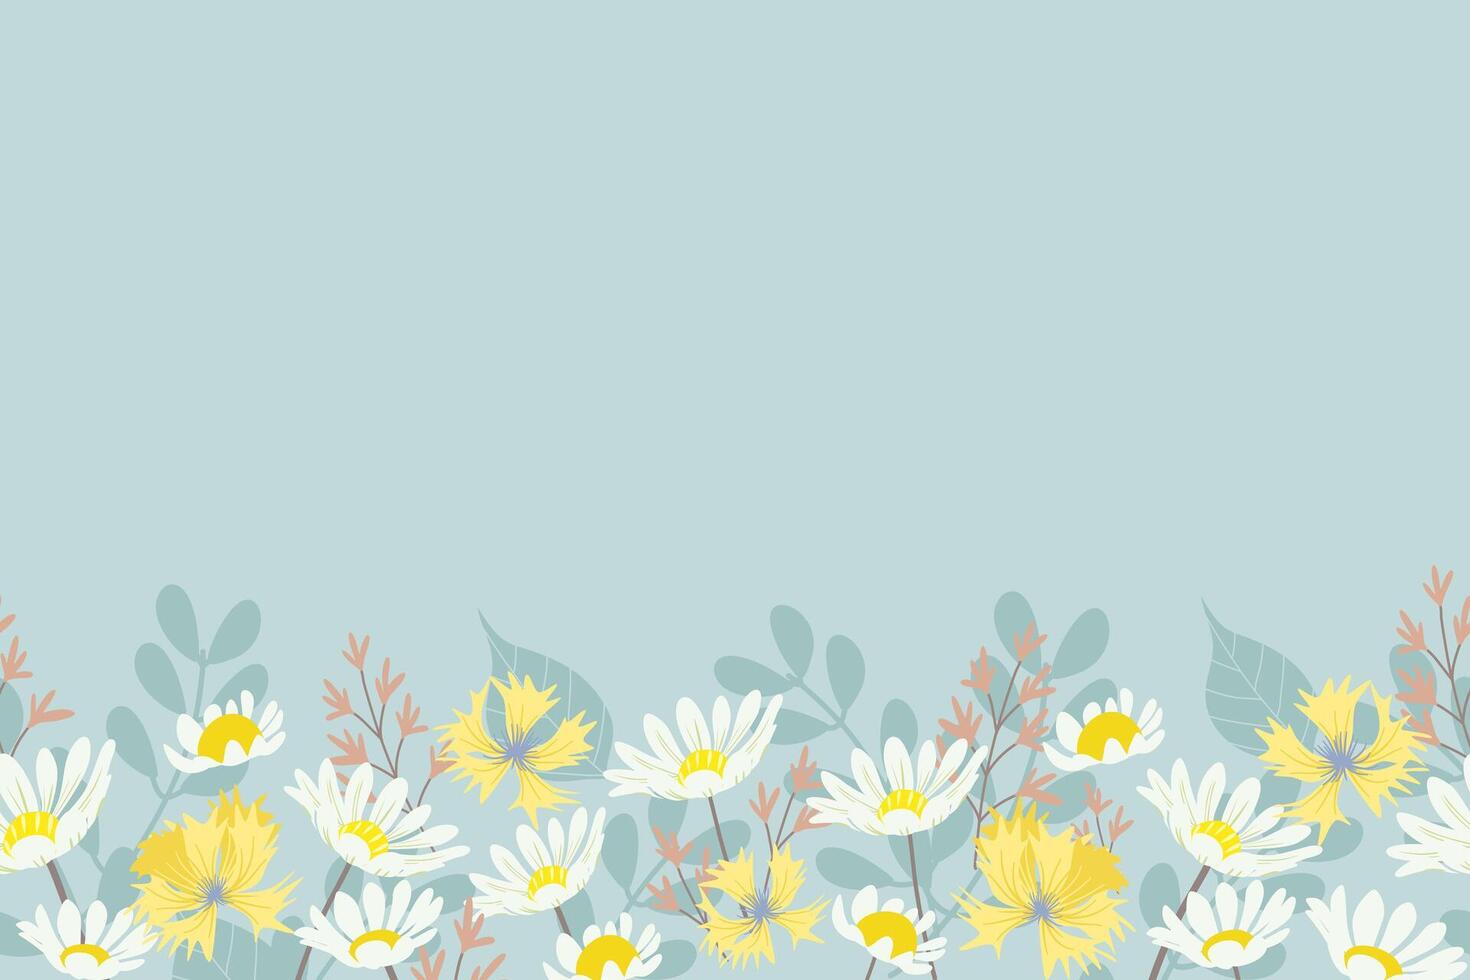 Flower and leaf backgrounds border frame white daisy cornflower meadows design. Vector illustration. Spring summer background.